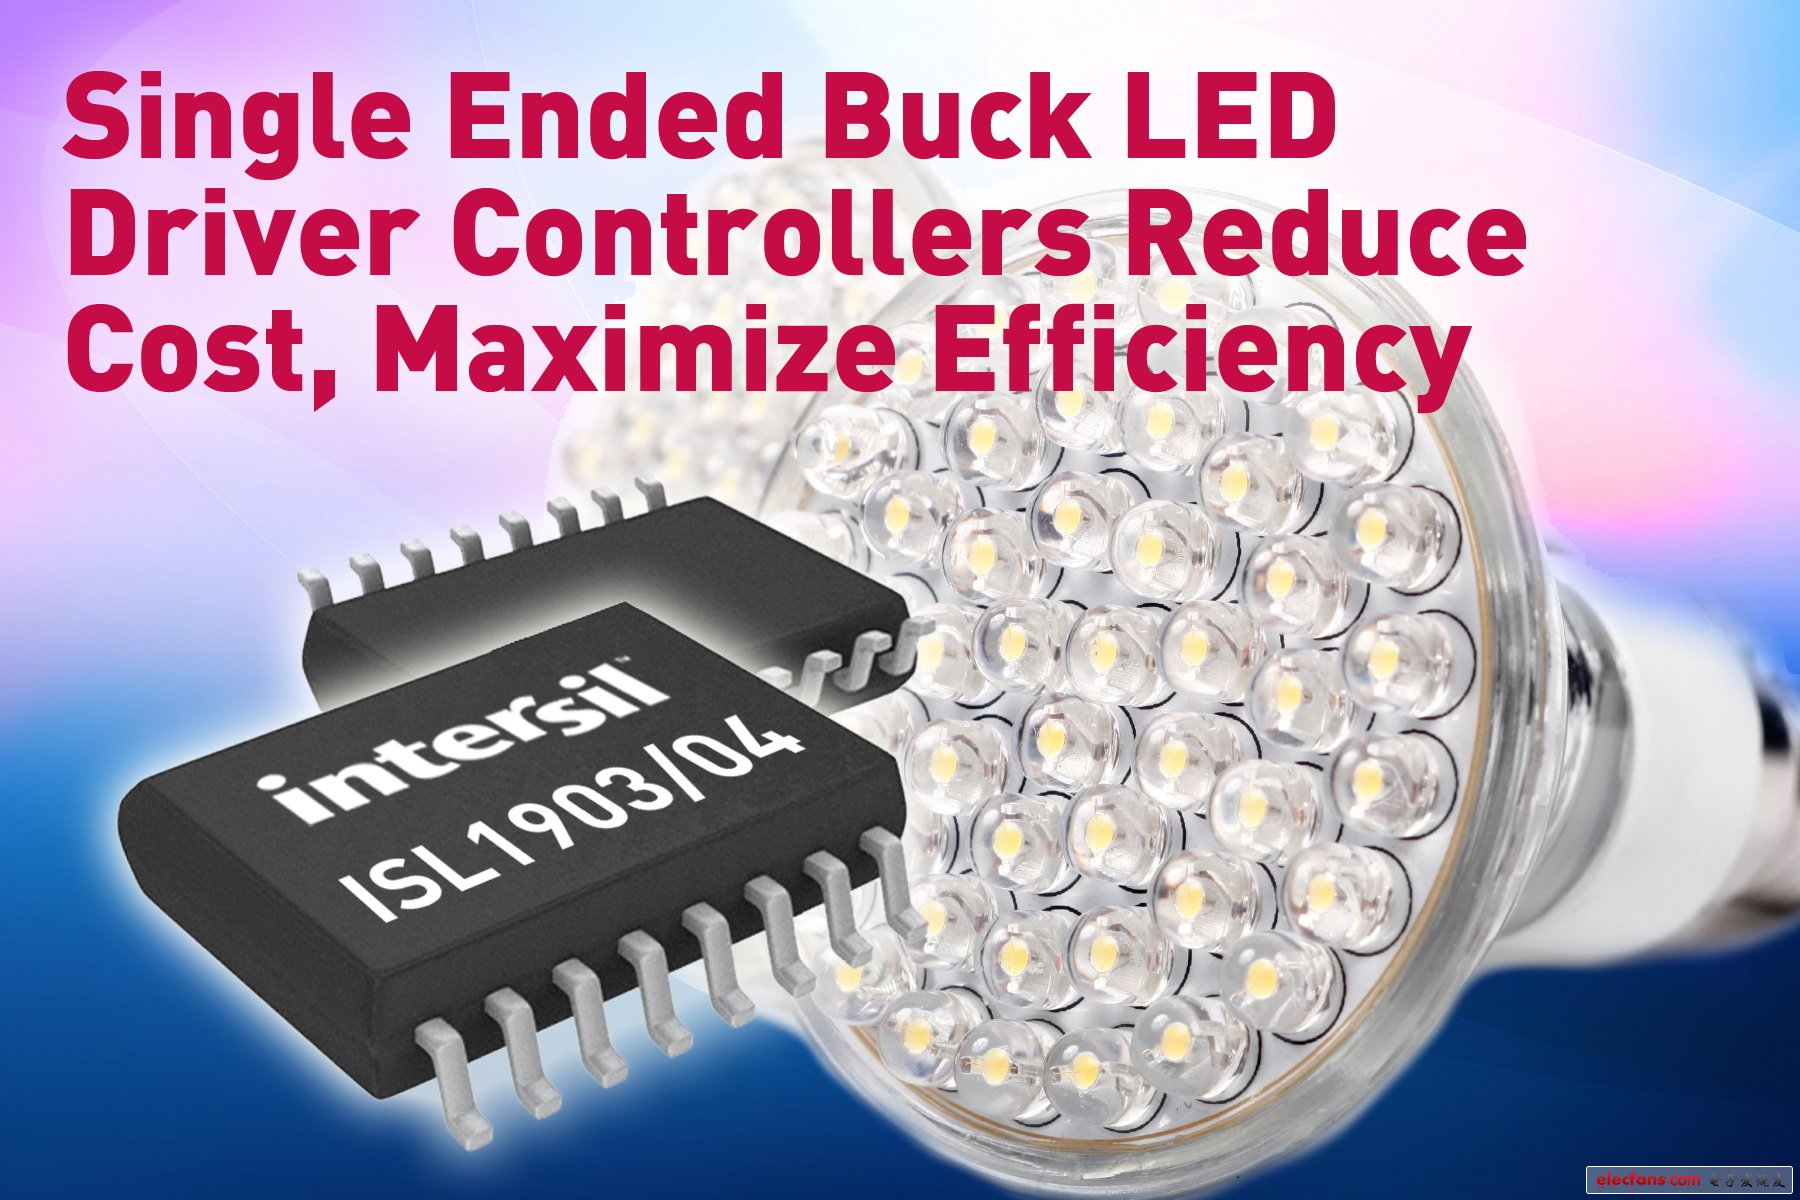 Intersil推出最新单端Buck降压LED驱动控制器，帮助降低成本和最大化效率